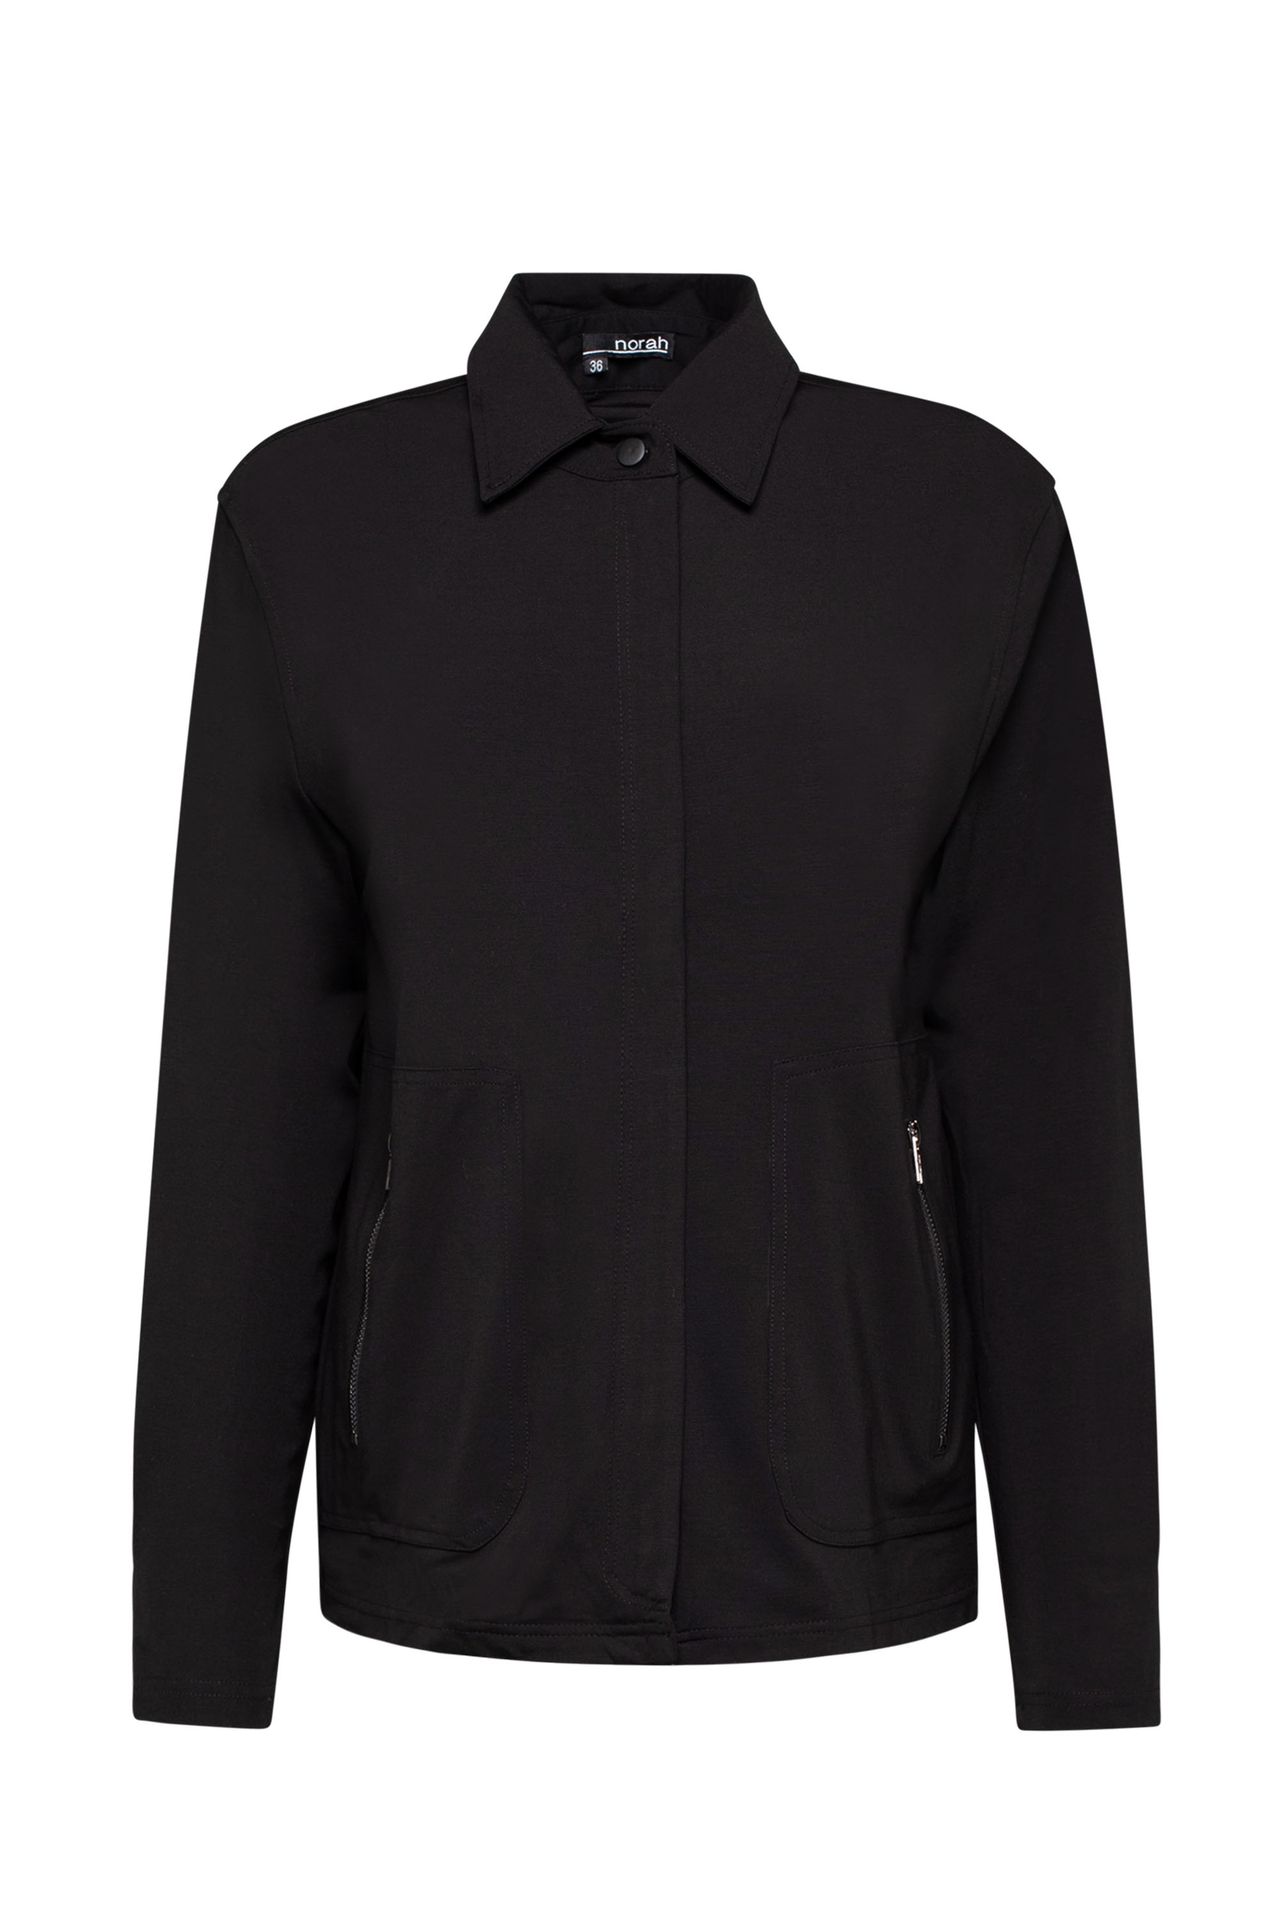 Norah Zwarte sportieve jacket black 212174-001